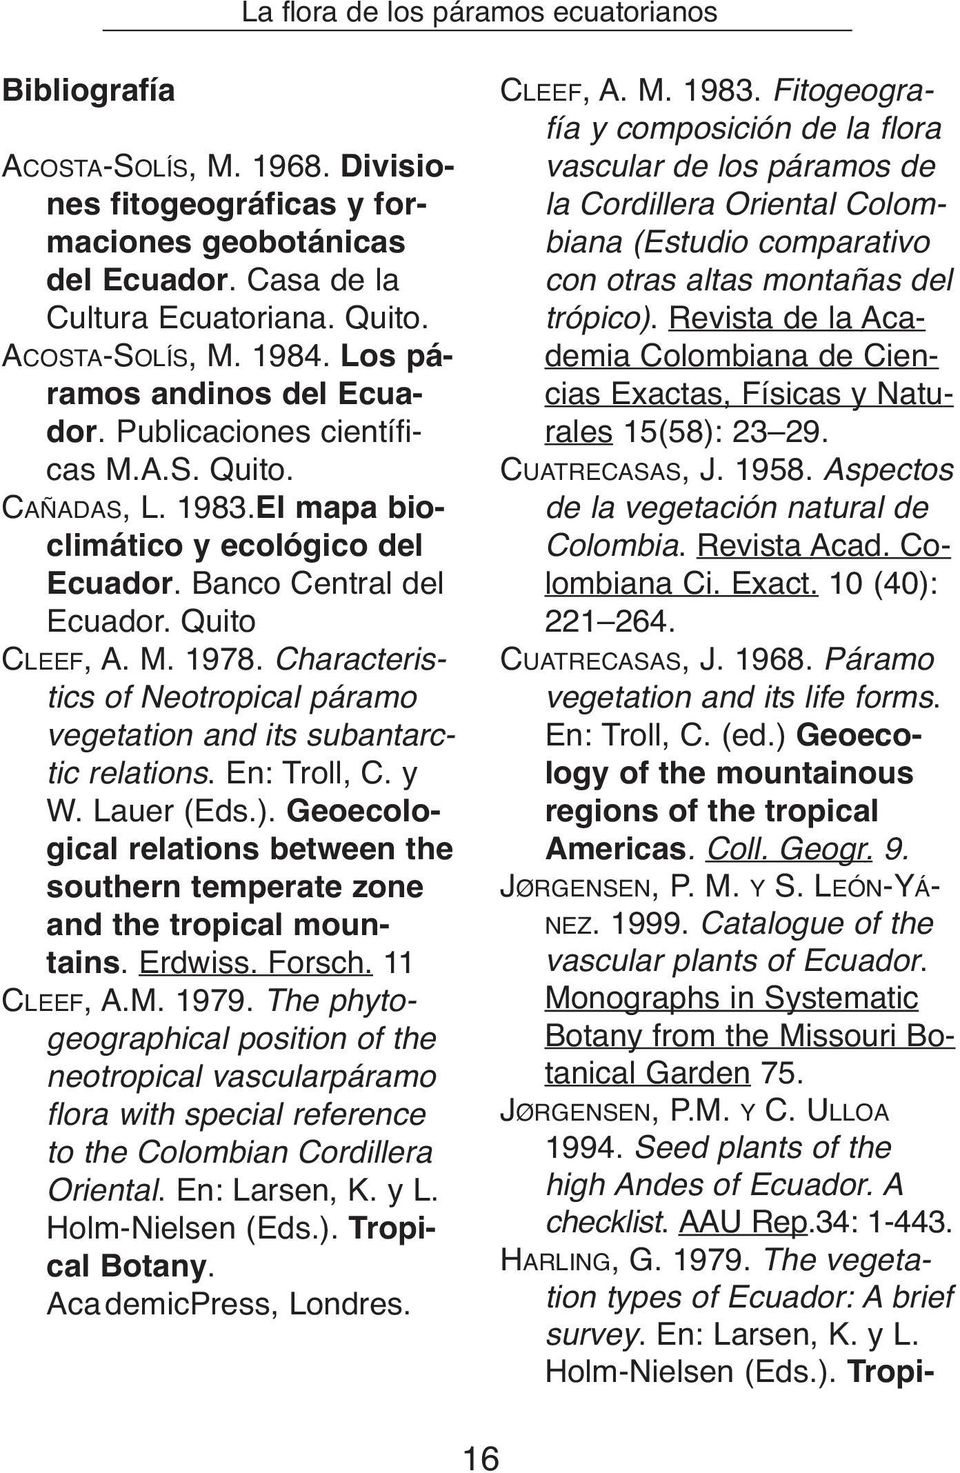 Characteristics of Neotropical páramo vegetation and its subantarctic relations. En: Troll, C. y W. Lauer (Eds.).